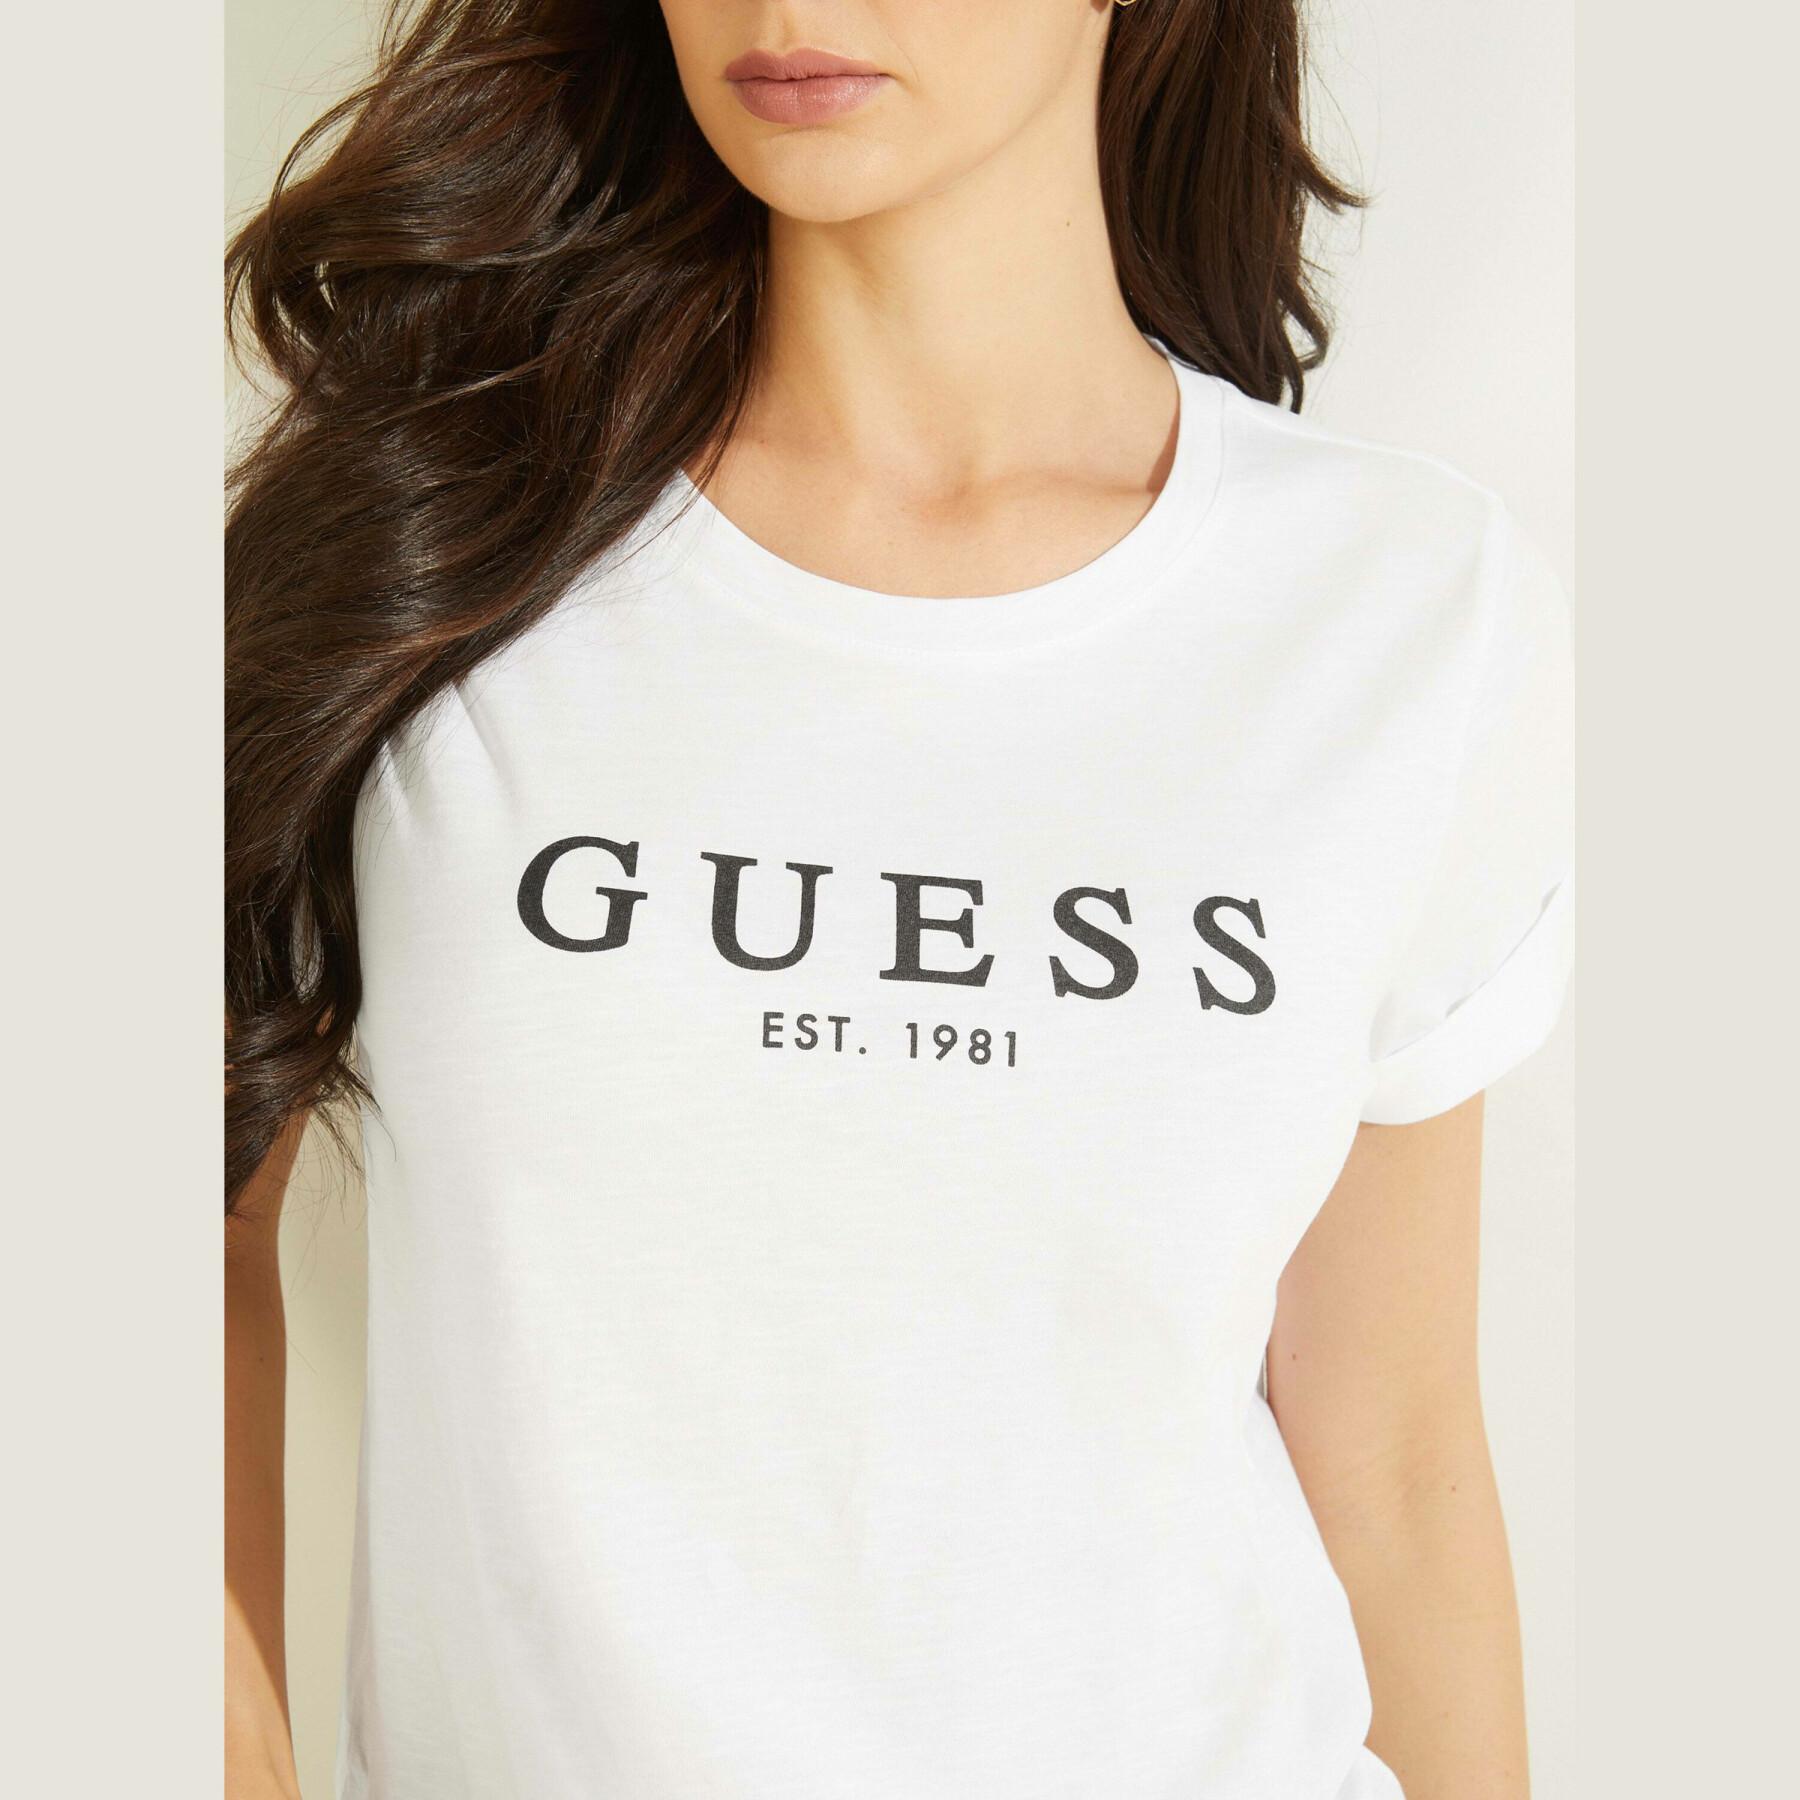 Camiseta de mujer Guess ES 1981 Roll Cuff